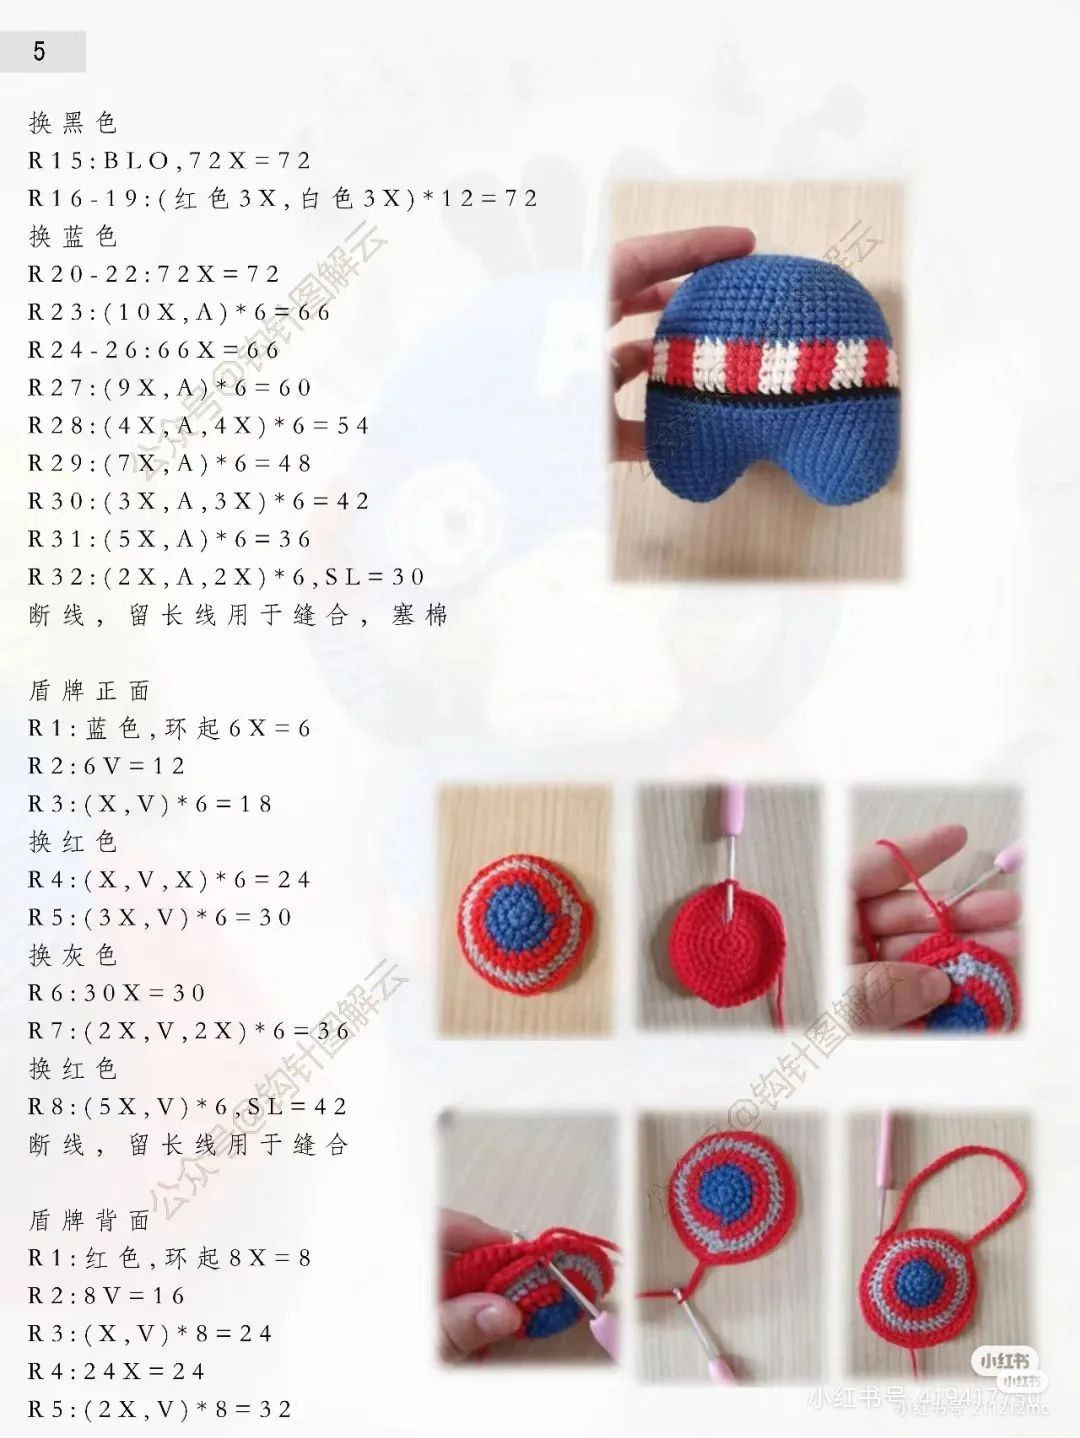 Duck crochet pattern Captain America version